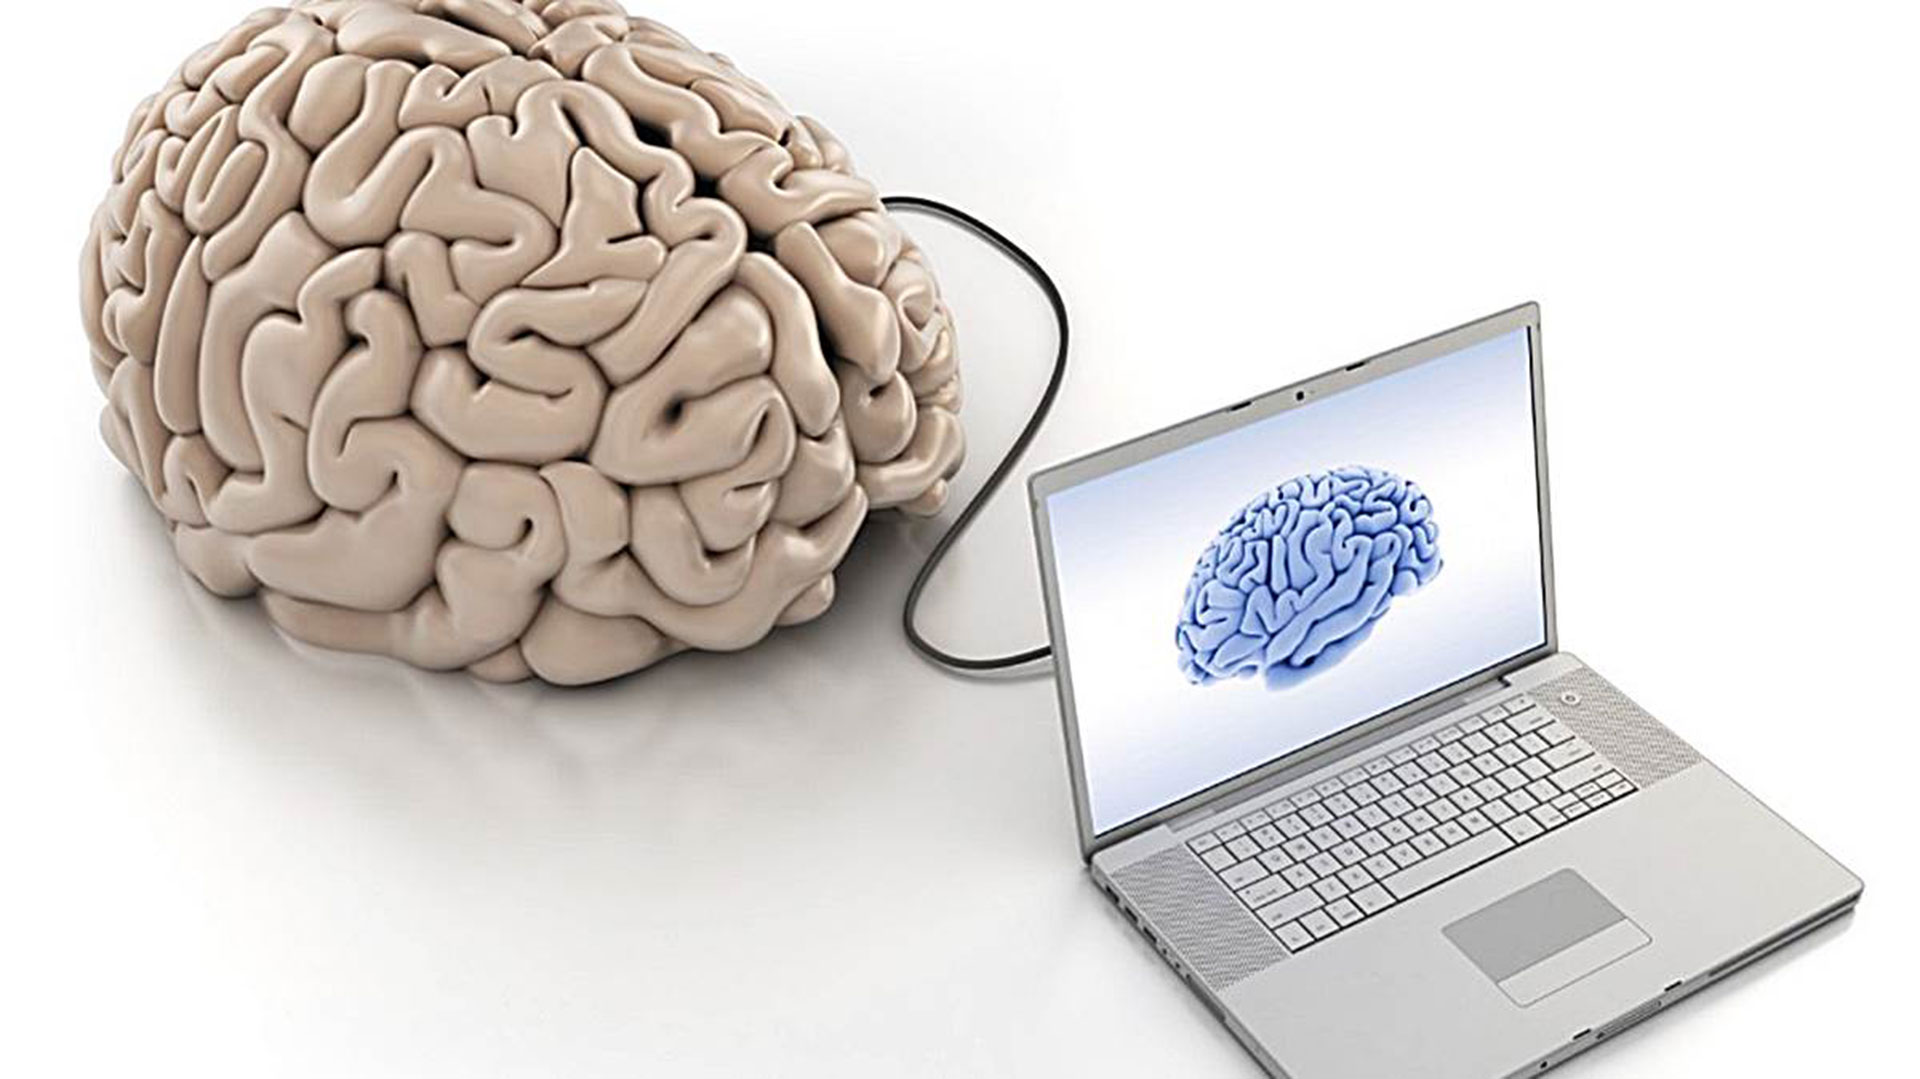 Brain information. Мозг компьютера. Мозг память. Компьютер и человеческий мозг. Память человека и компьютера.